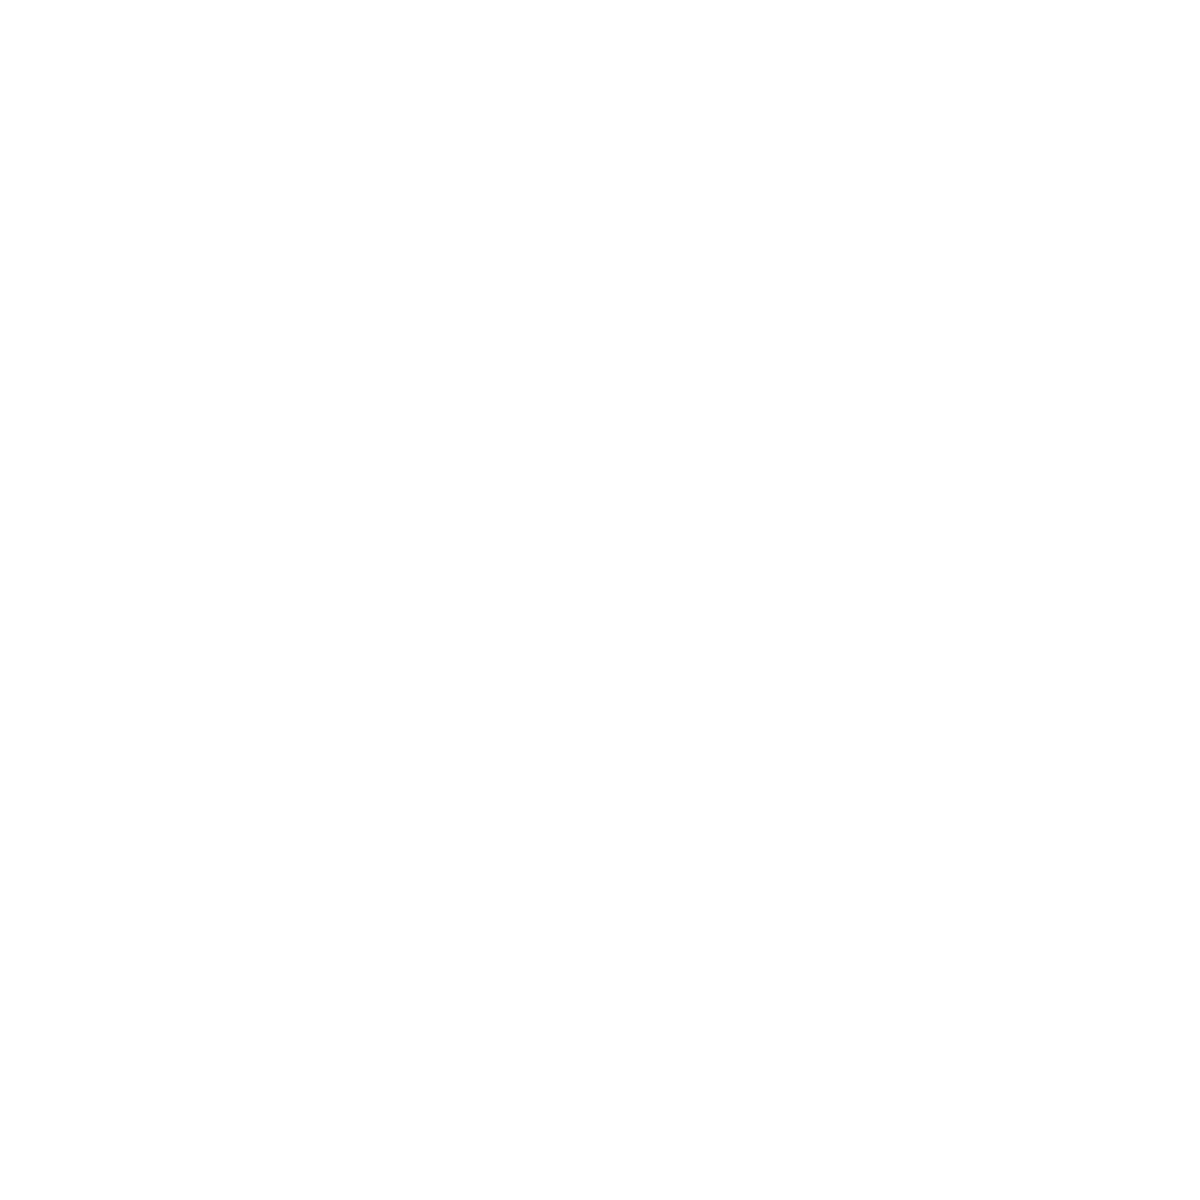 Viva Calavera